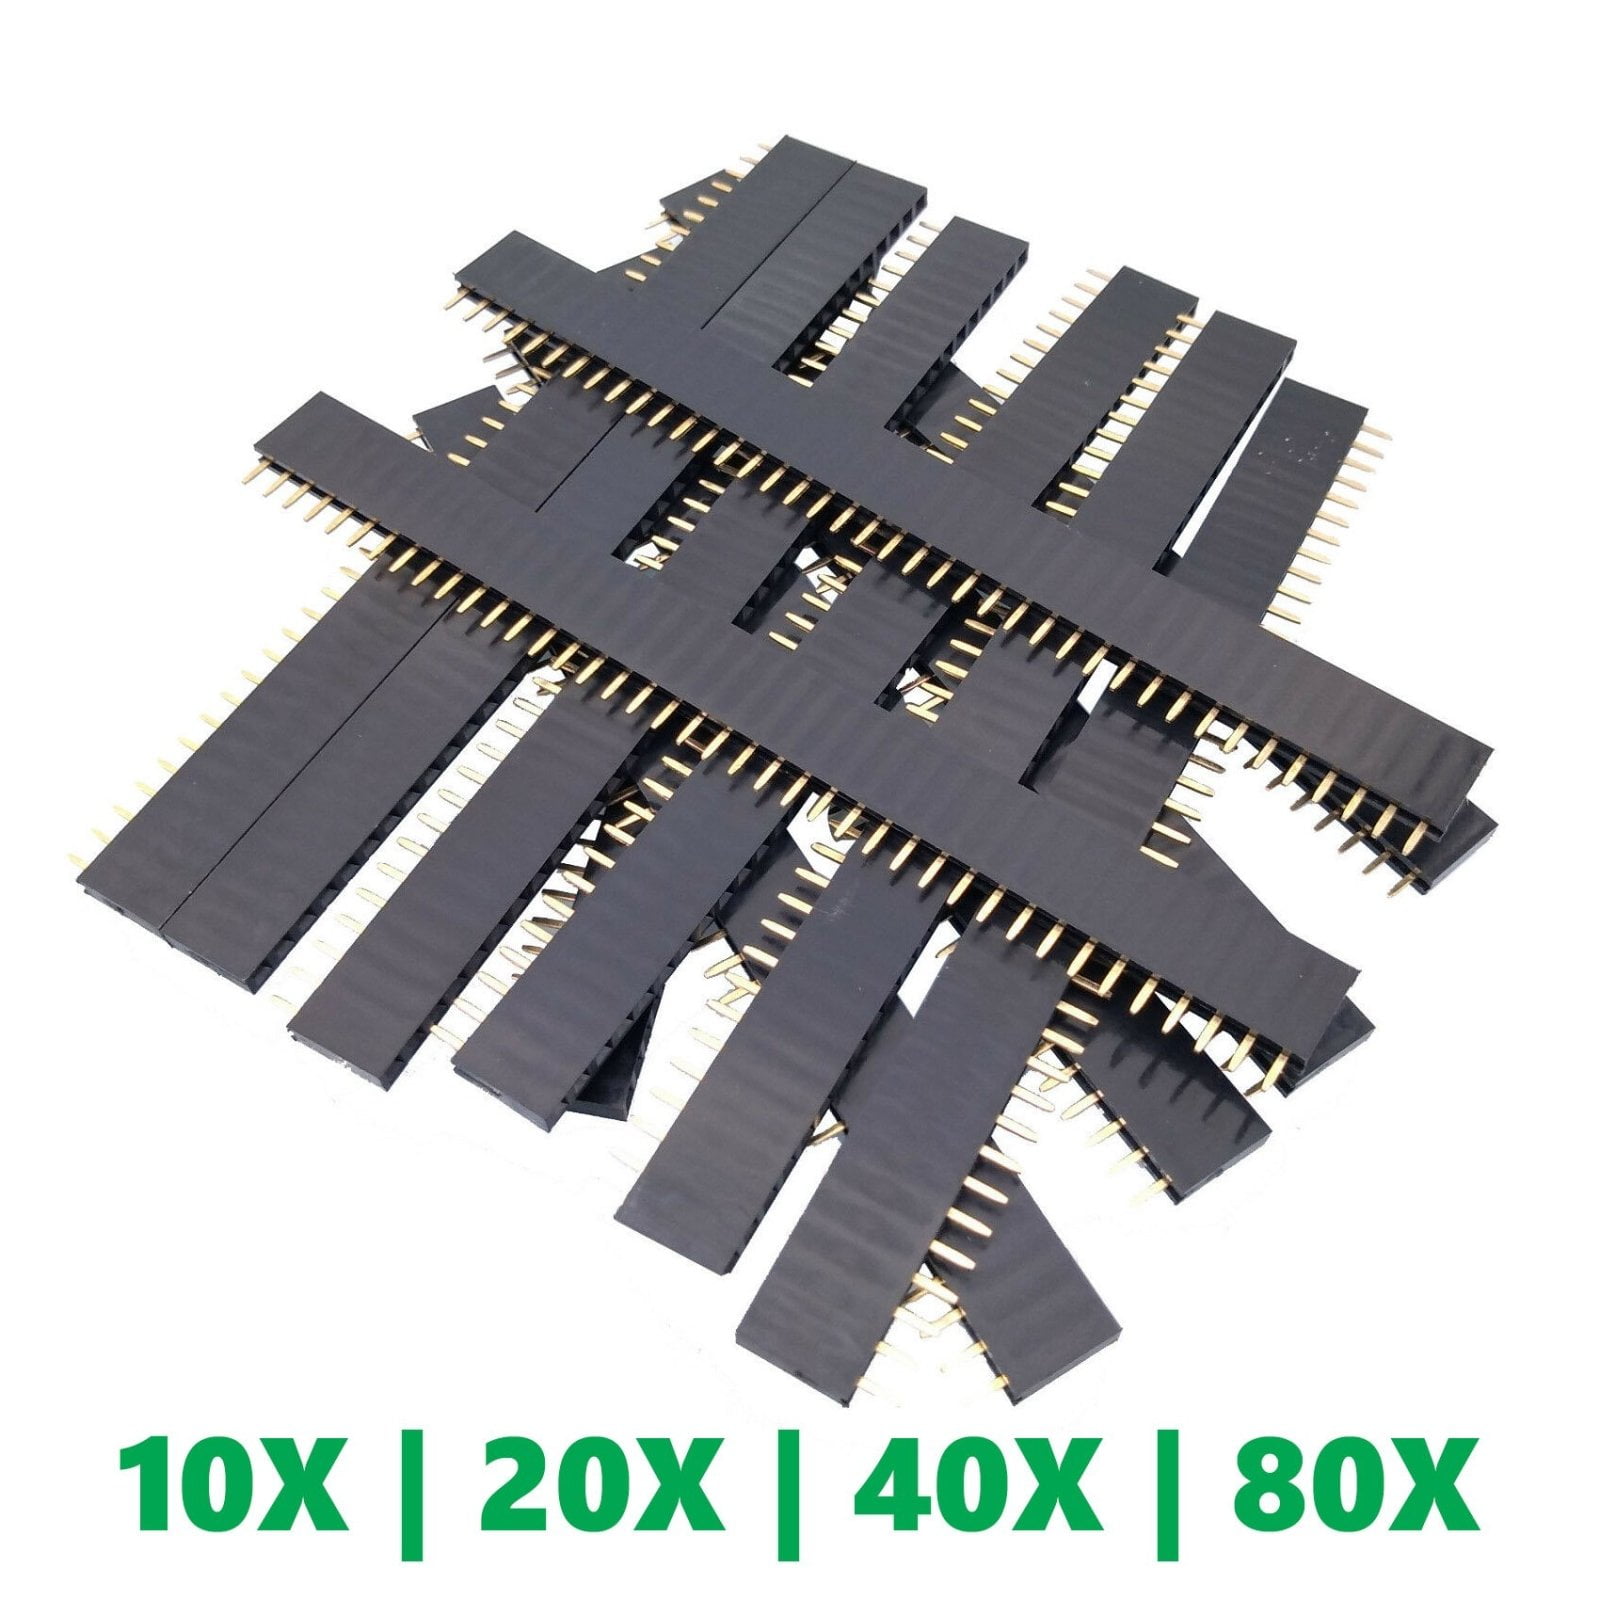 10 Pin Header Pins Strip PCB 0.1" 2.54mm for Arduino Breadboard